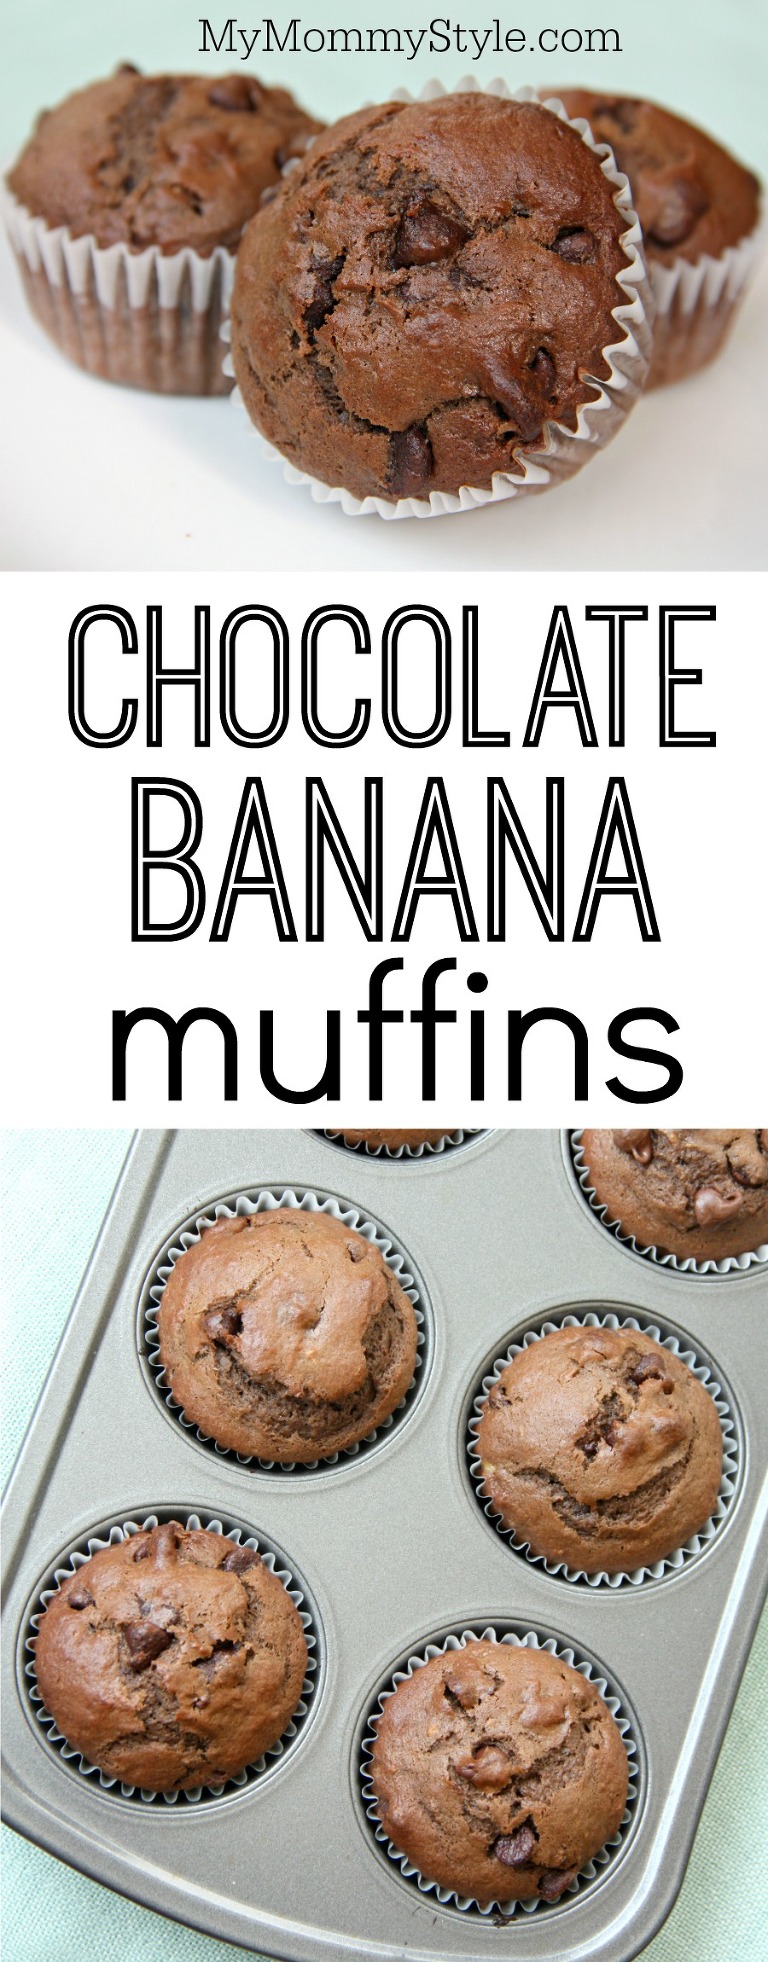 Double chocolate banana muffins